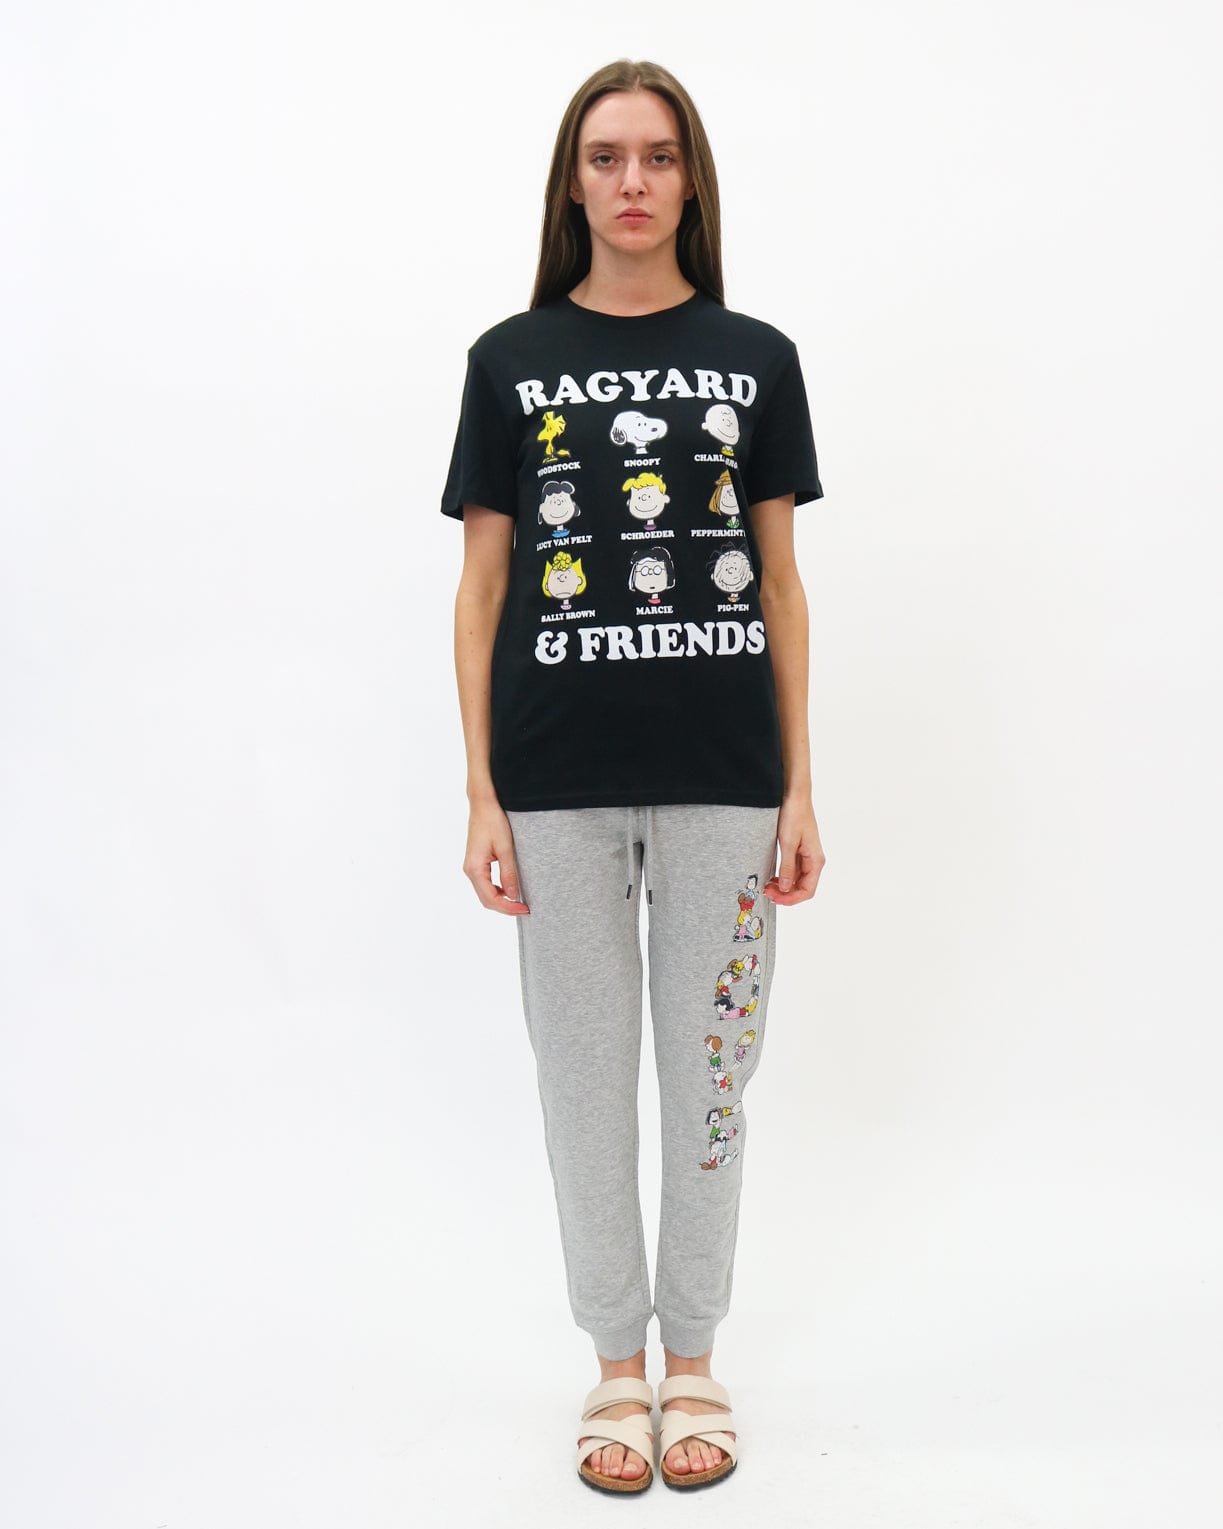 Ragyard X Peanuts Ragyard and Friends T-shirt